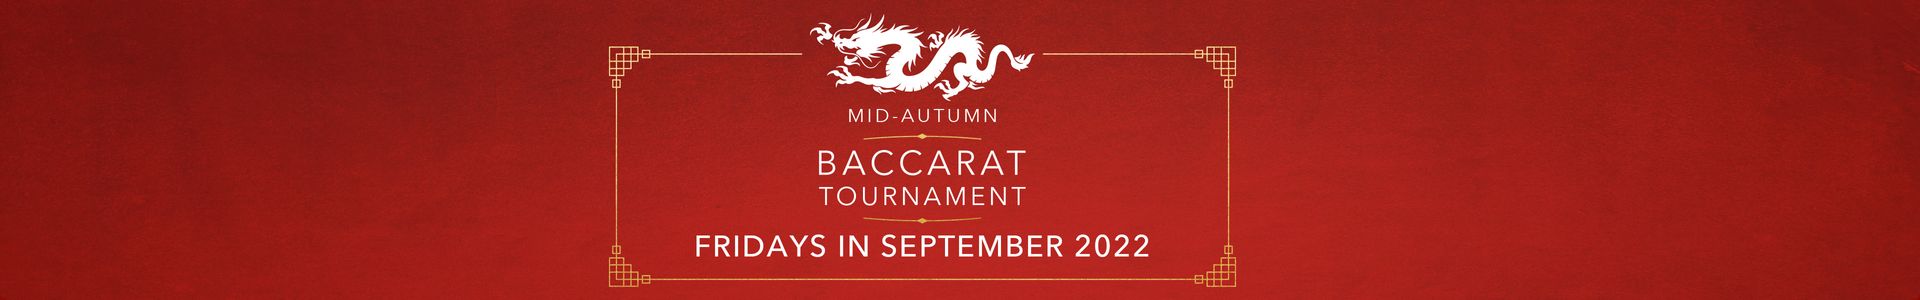 Mid-Autumn Baccarat Tournament